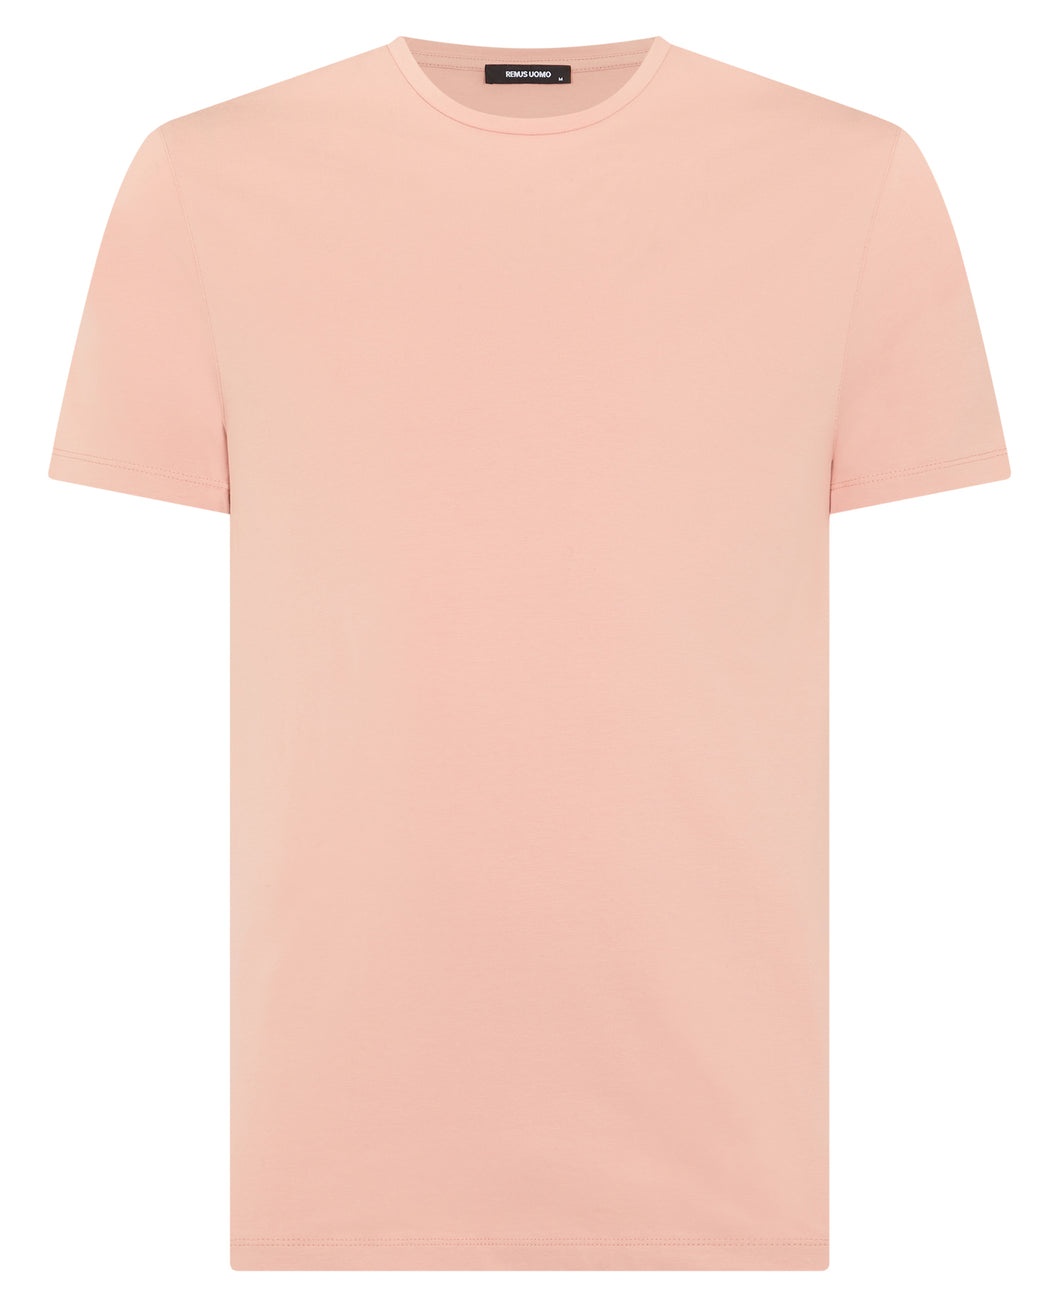 REMUS UOMO Stretch Cotton T Shirt 3-53121